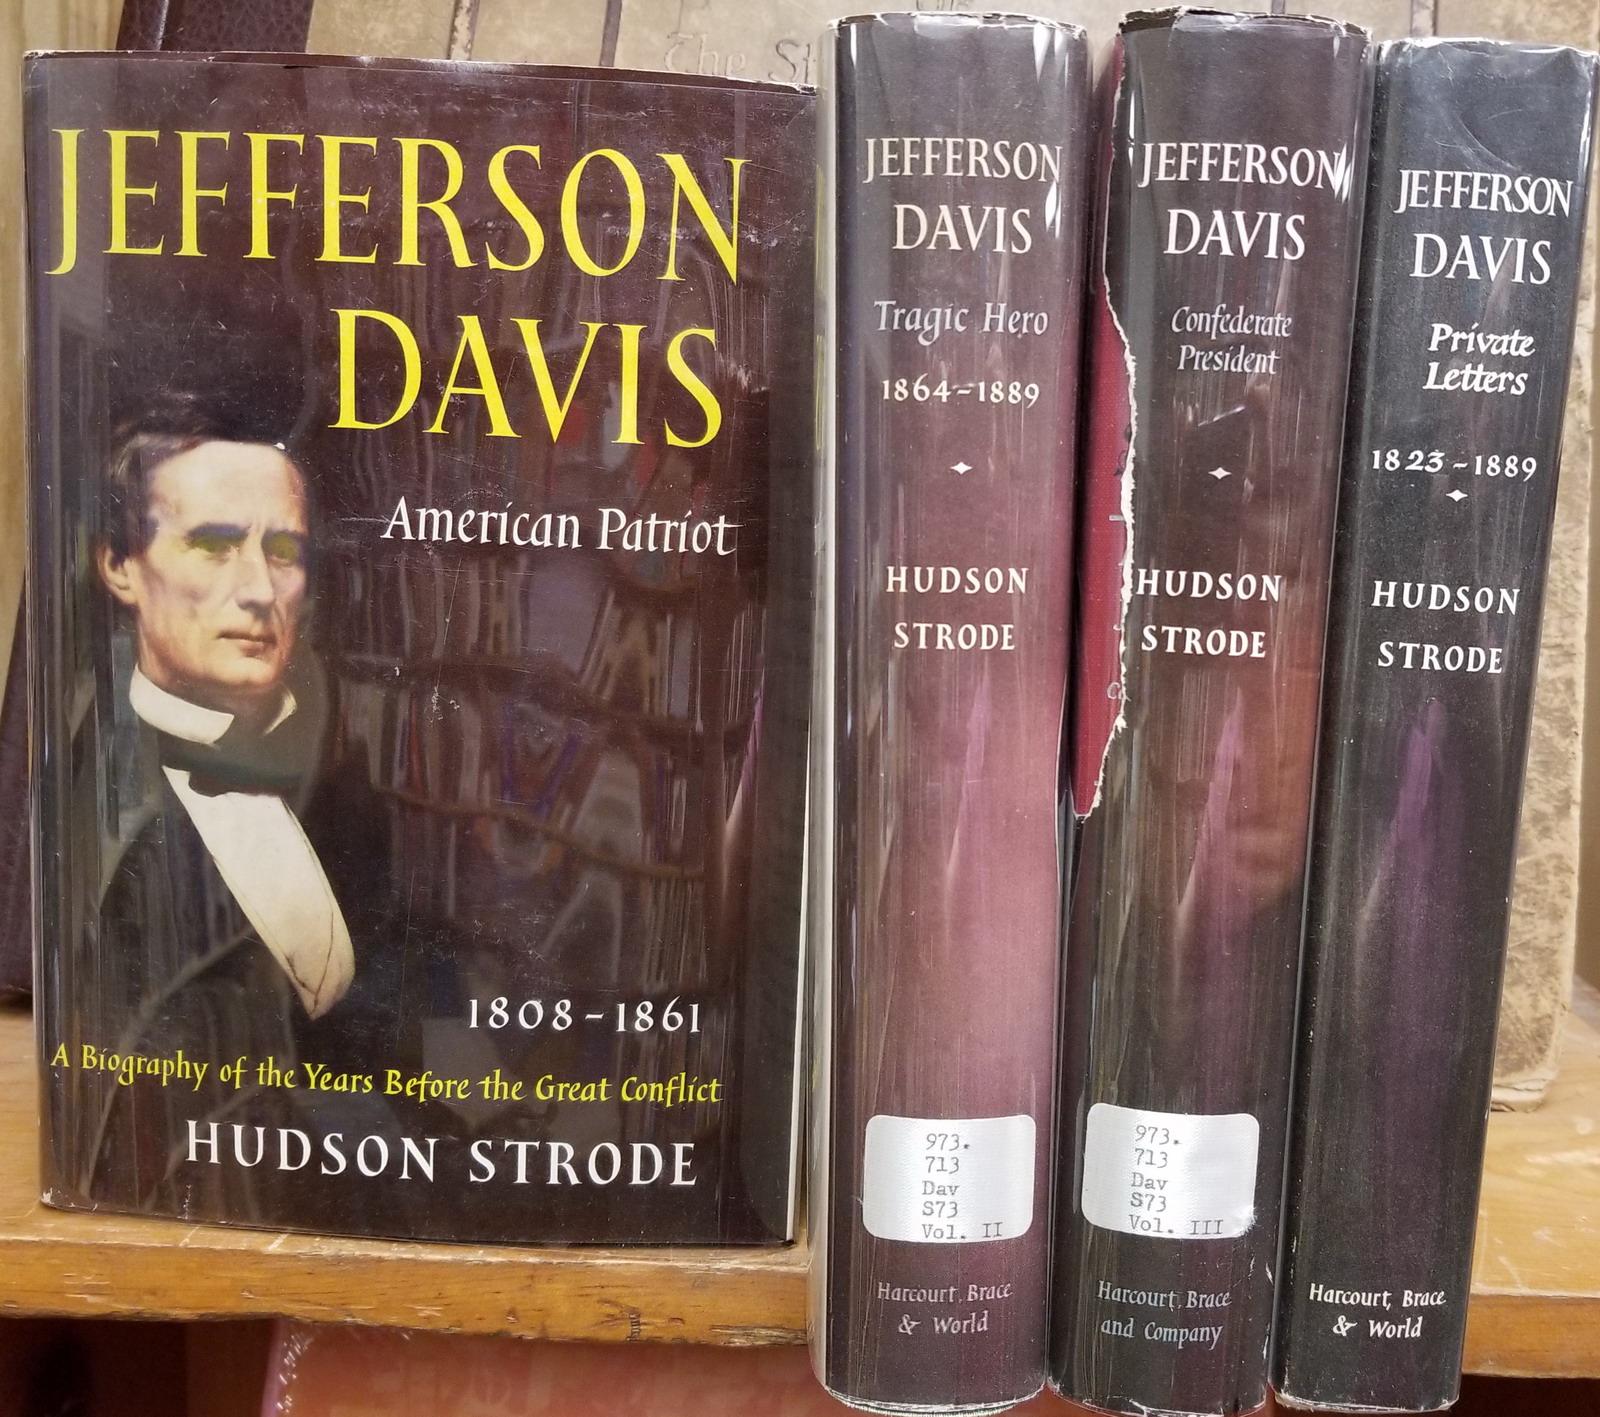 Jefferson Davis - tragic hero. The last twenty-five years, 1864-1889